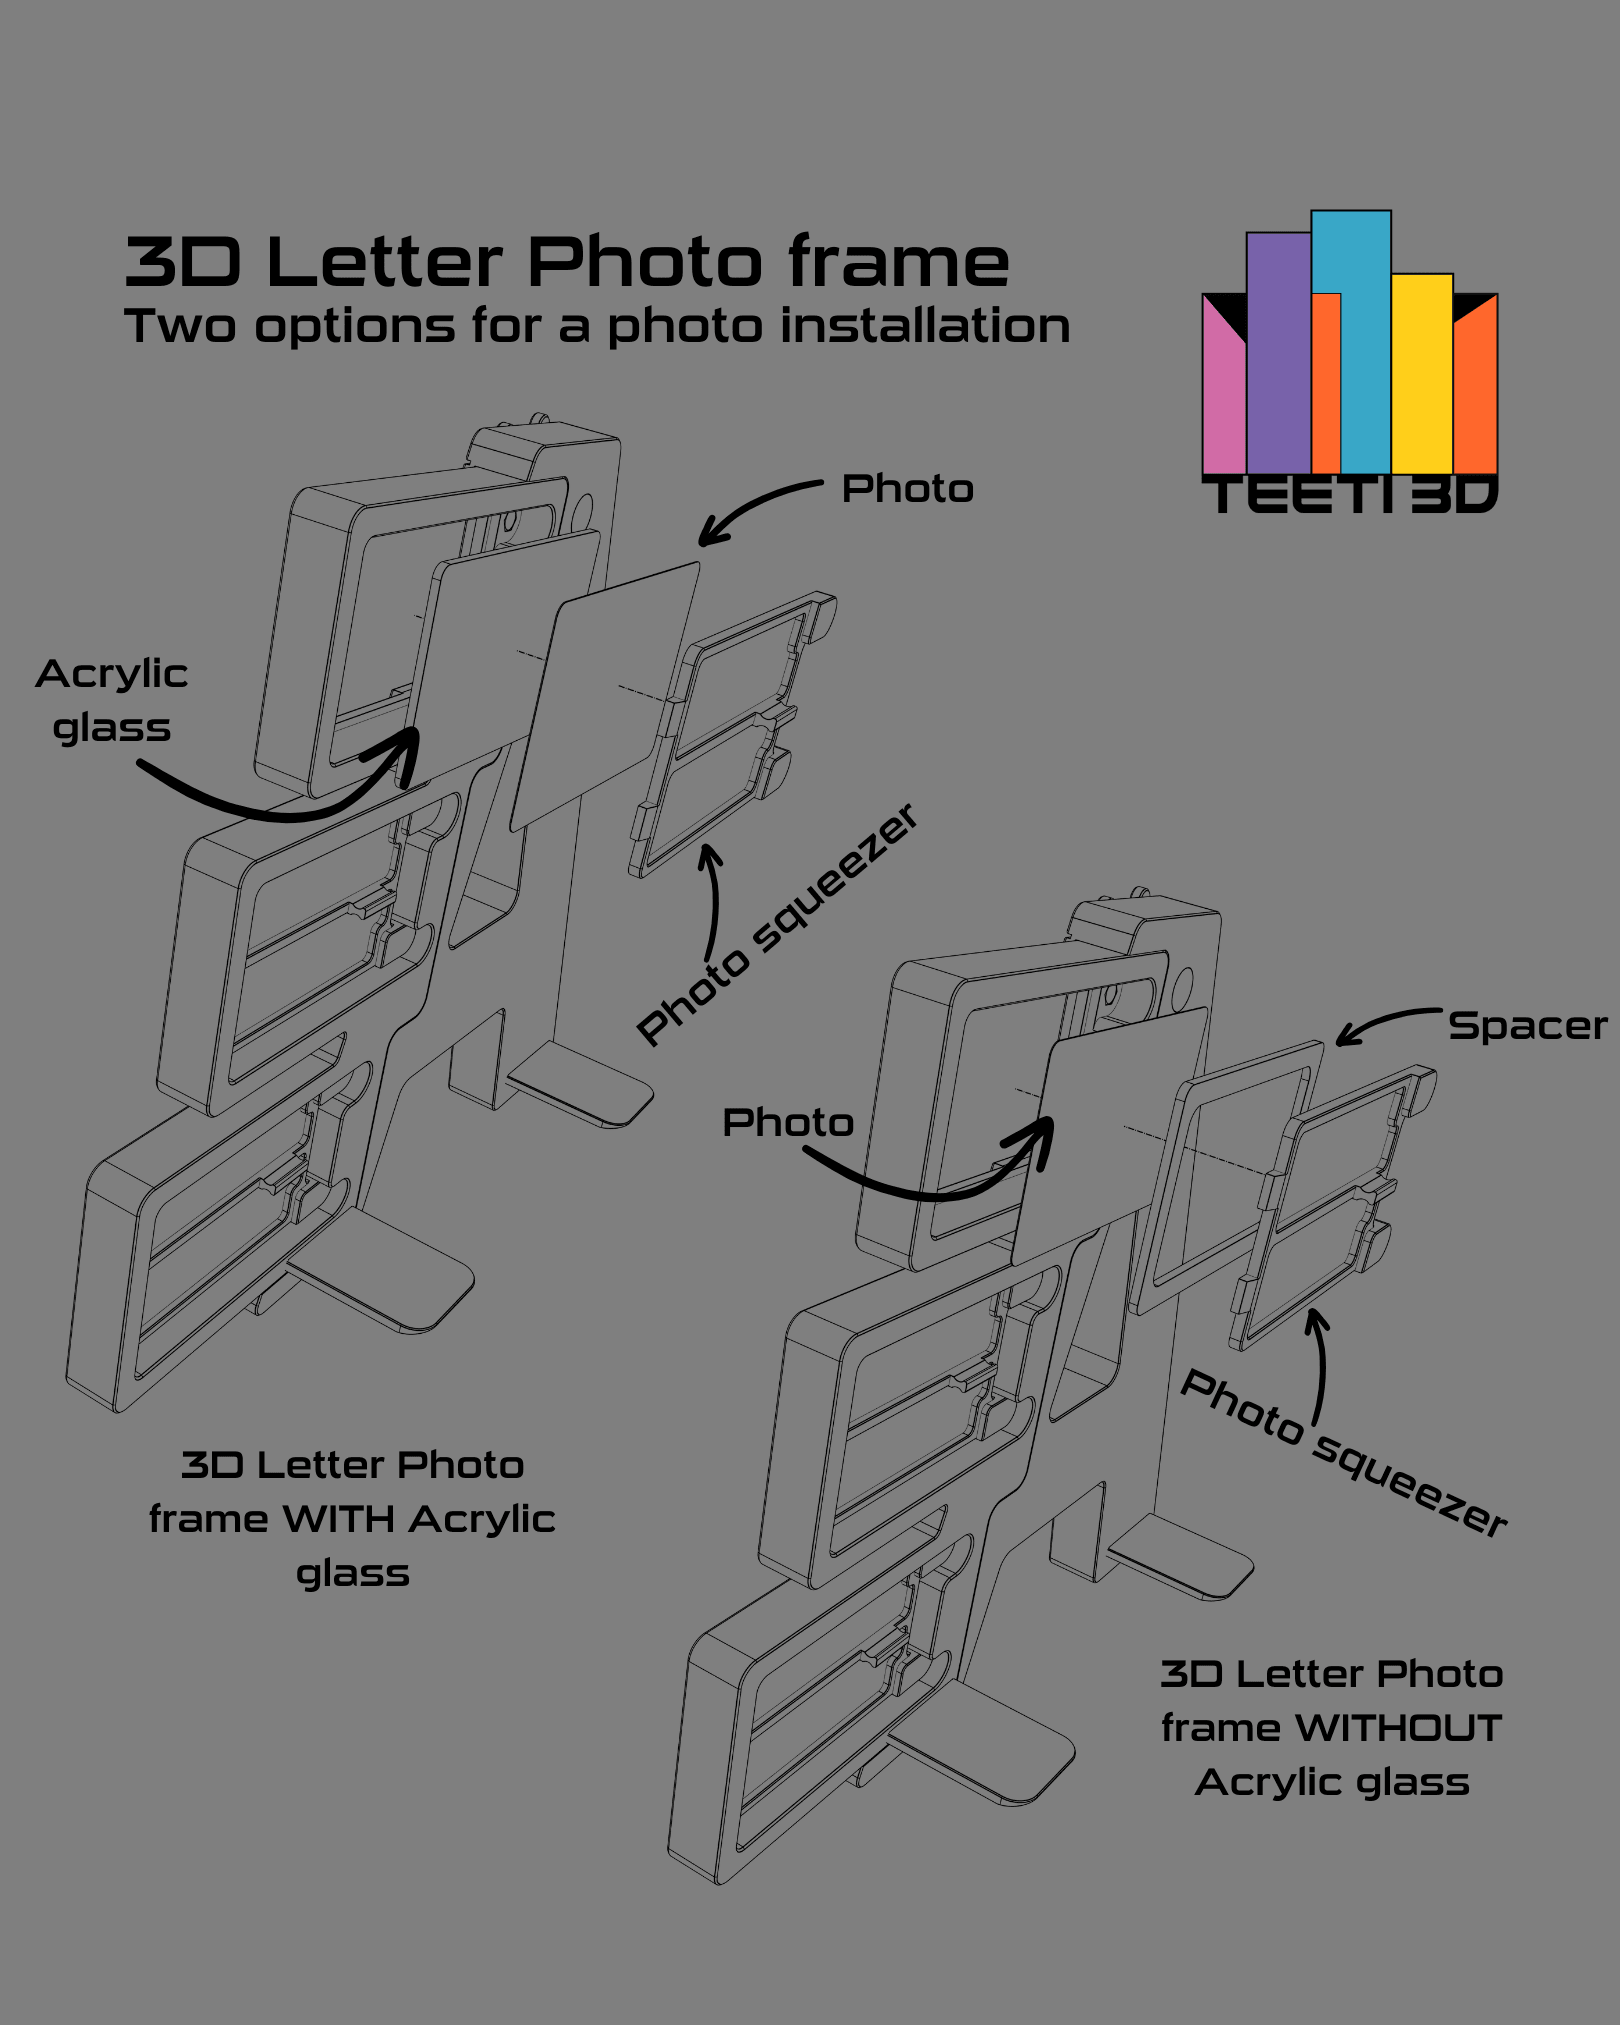 3D Letter "L" with Photo Frame 3d model